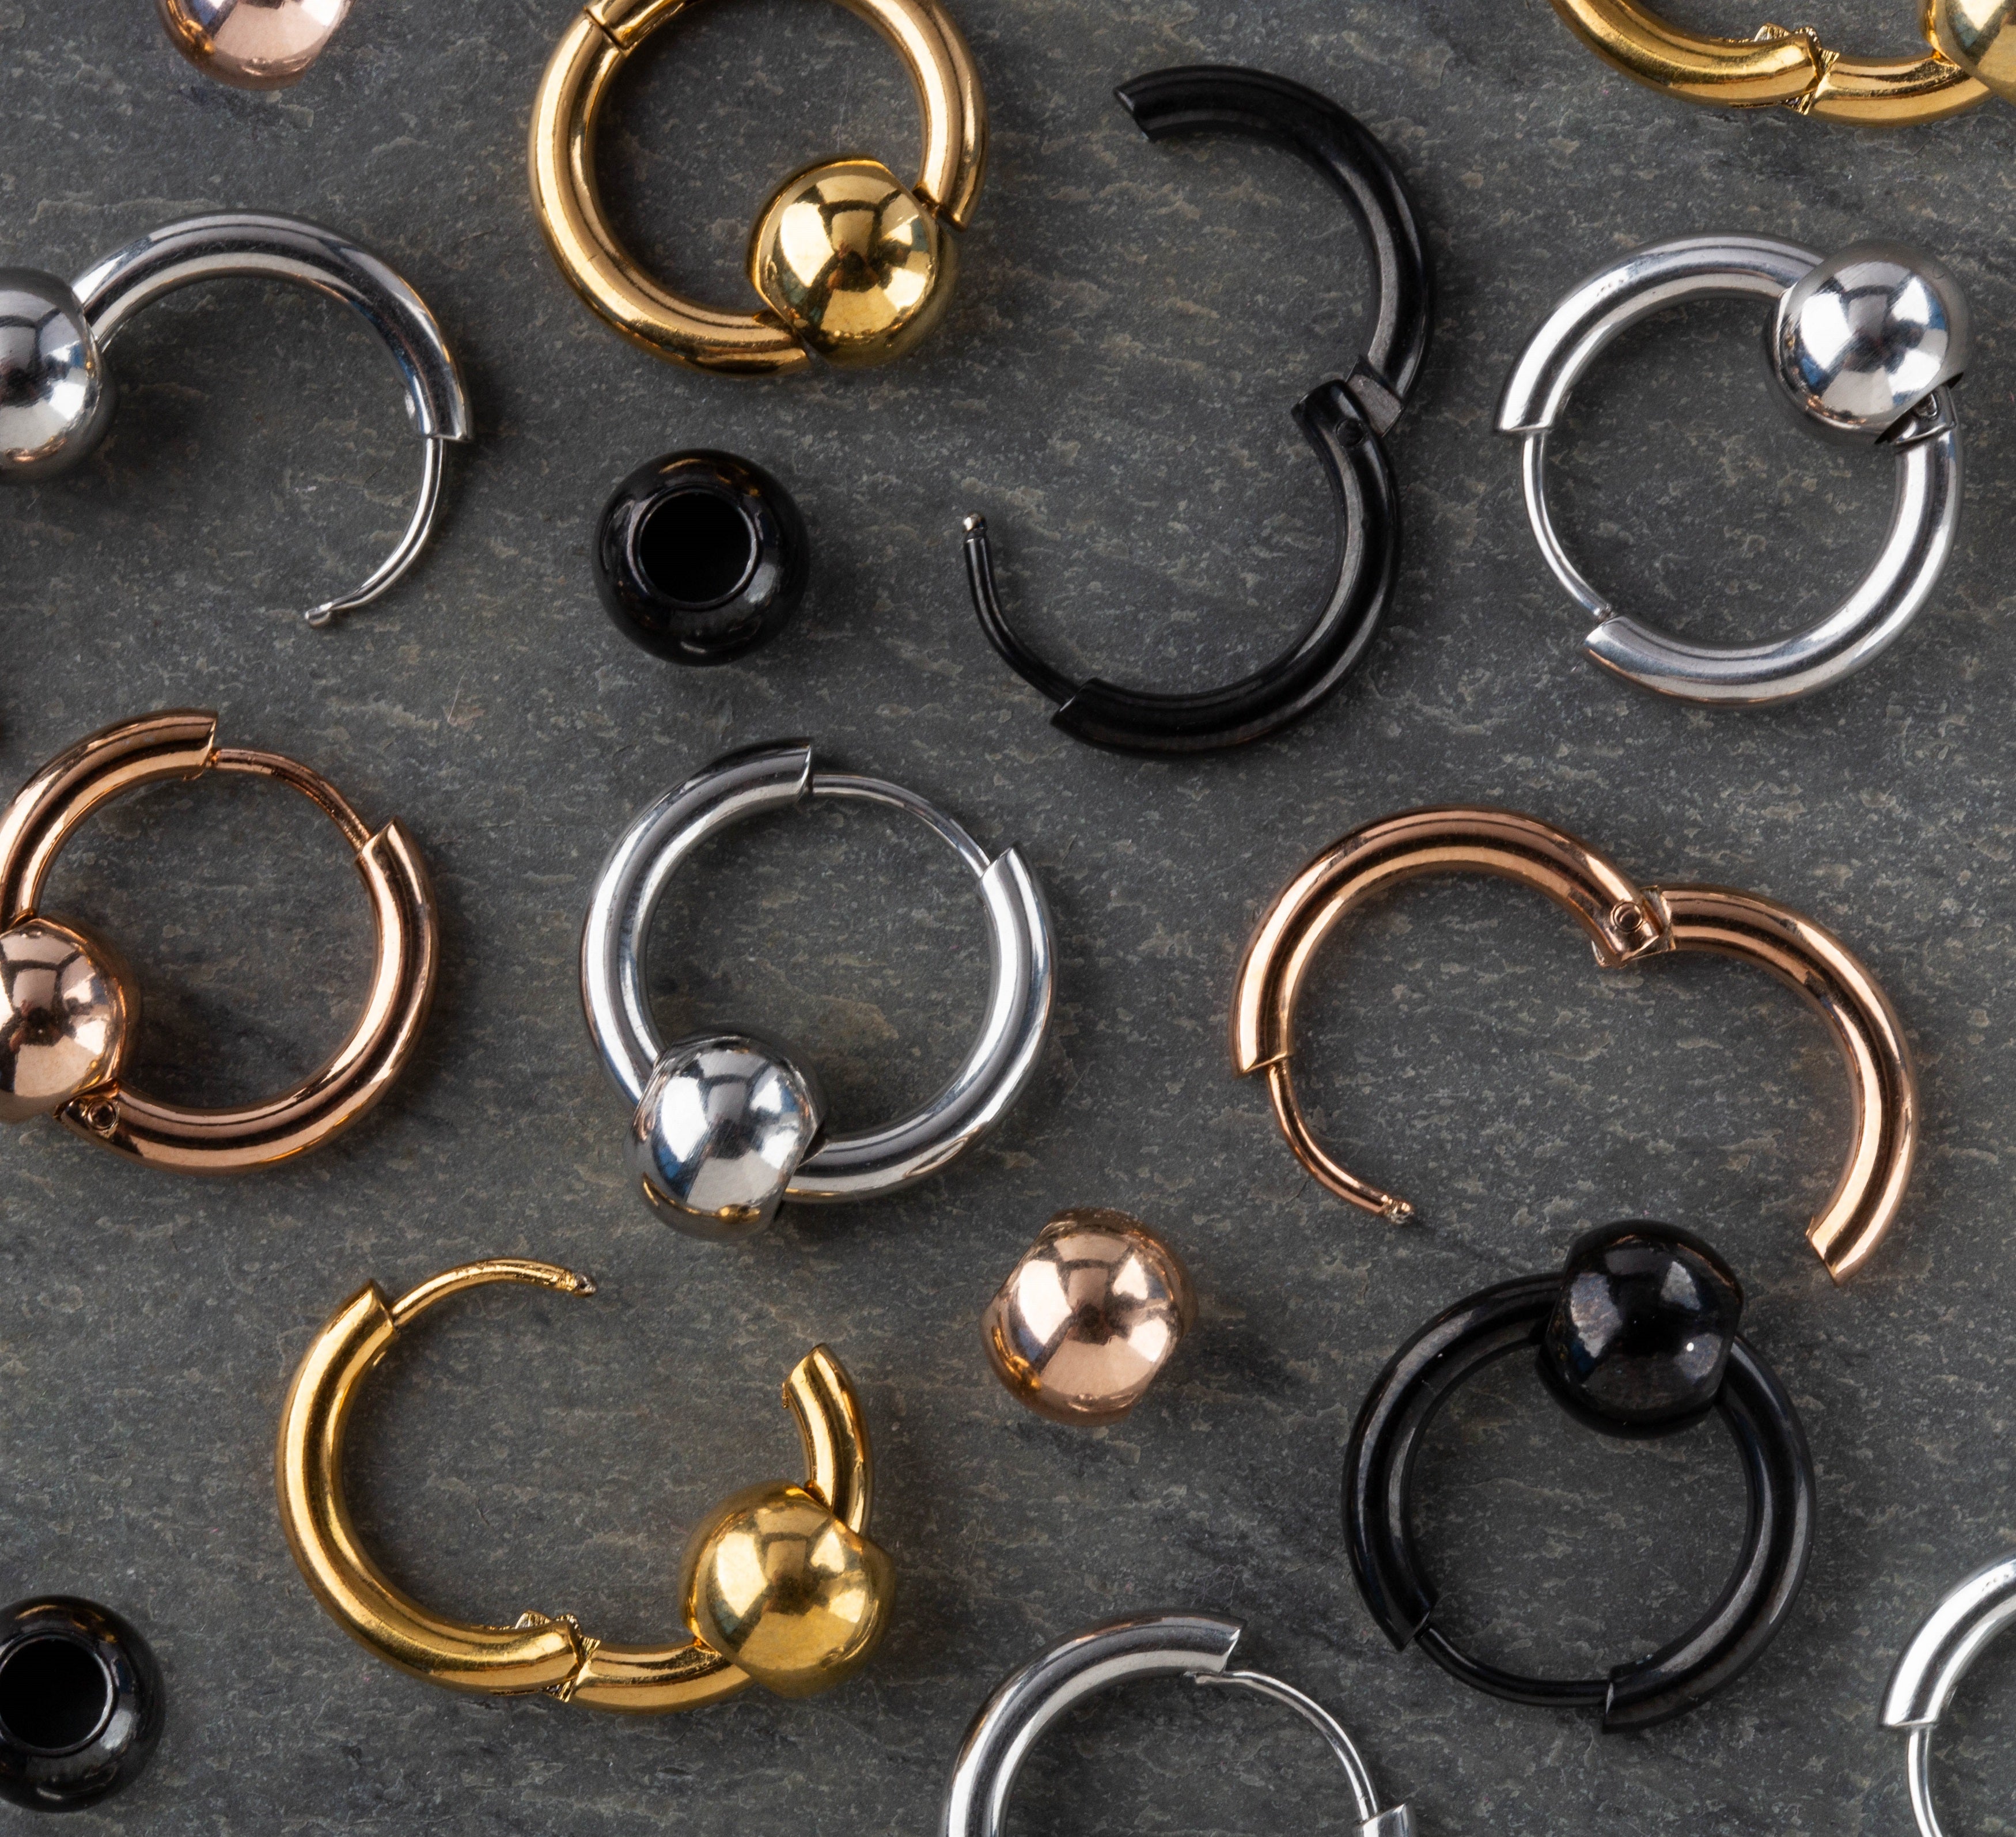 Captive Bead Ring – The Piercing Urge